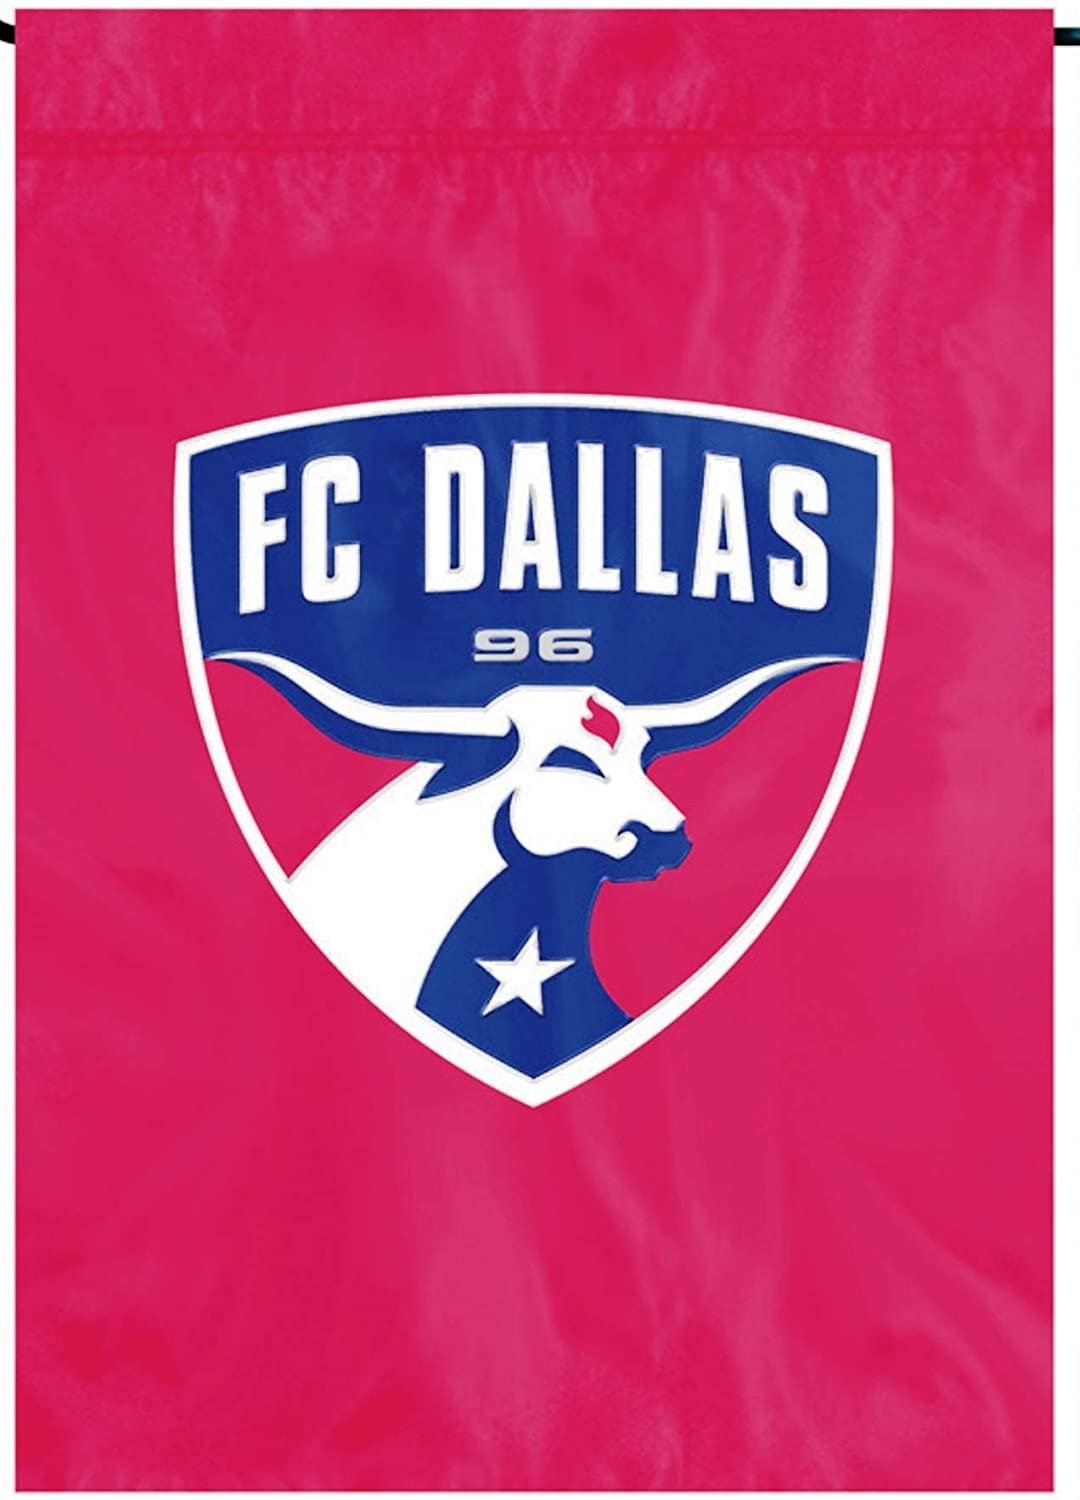 Party Animal FC Dallas Premium Garden Flag Applique & Embroidered Banner Soccer MLS Football Club